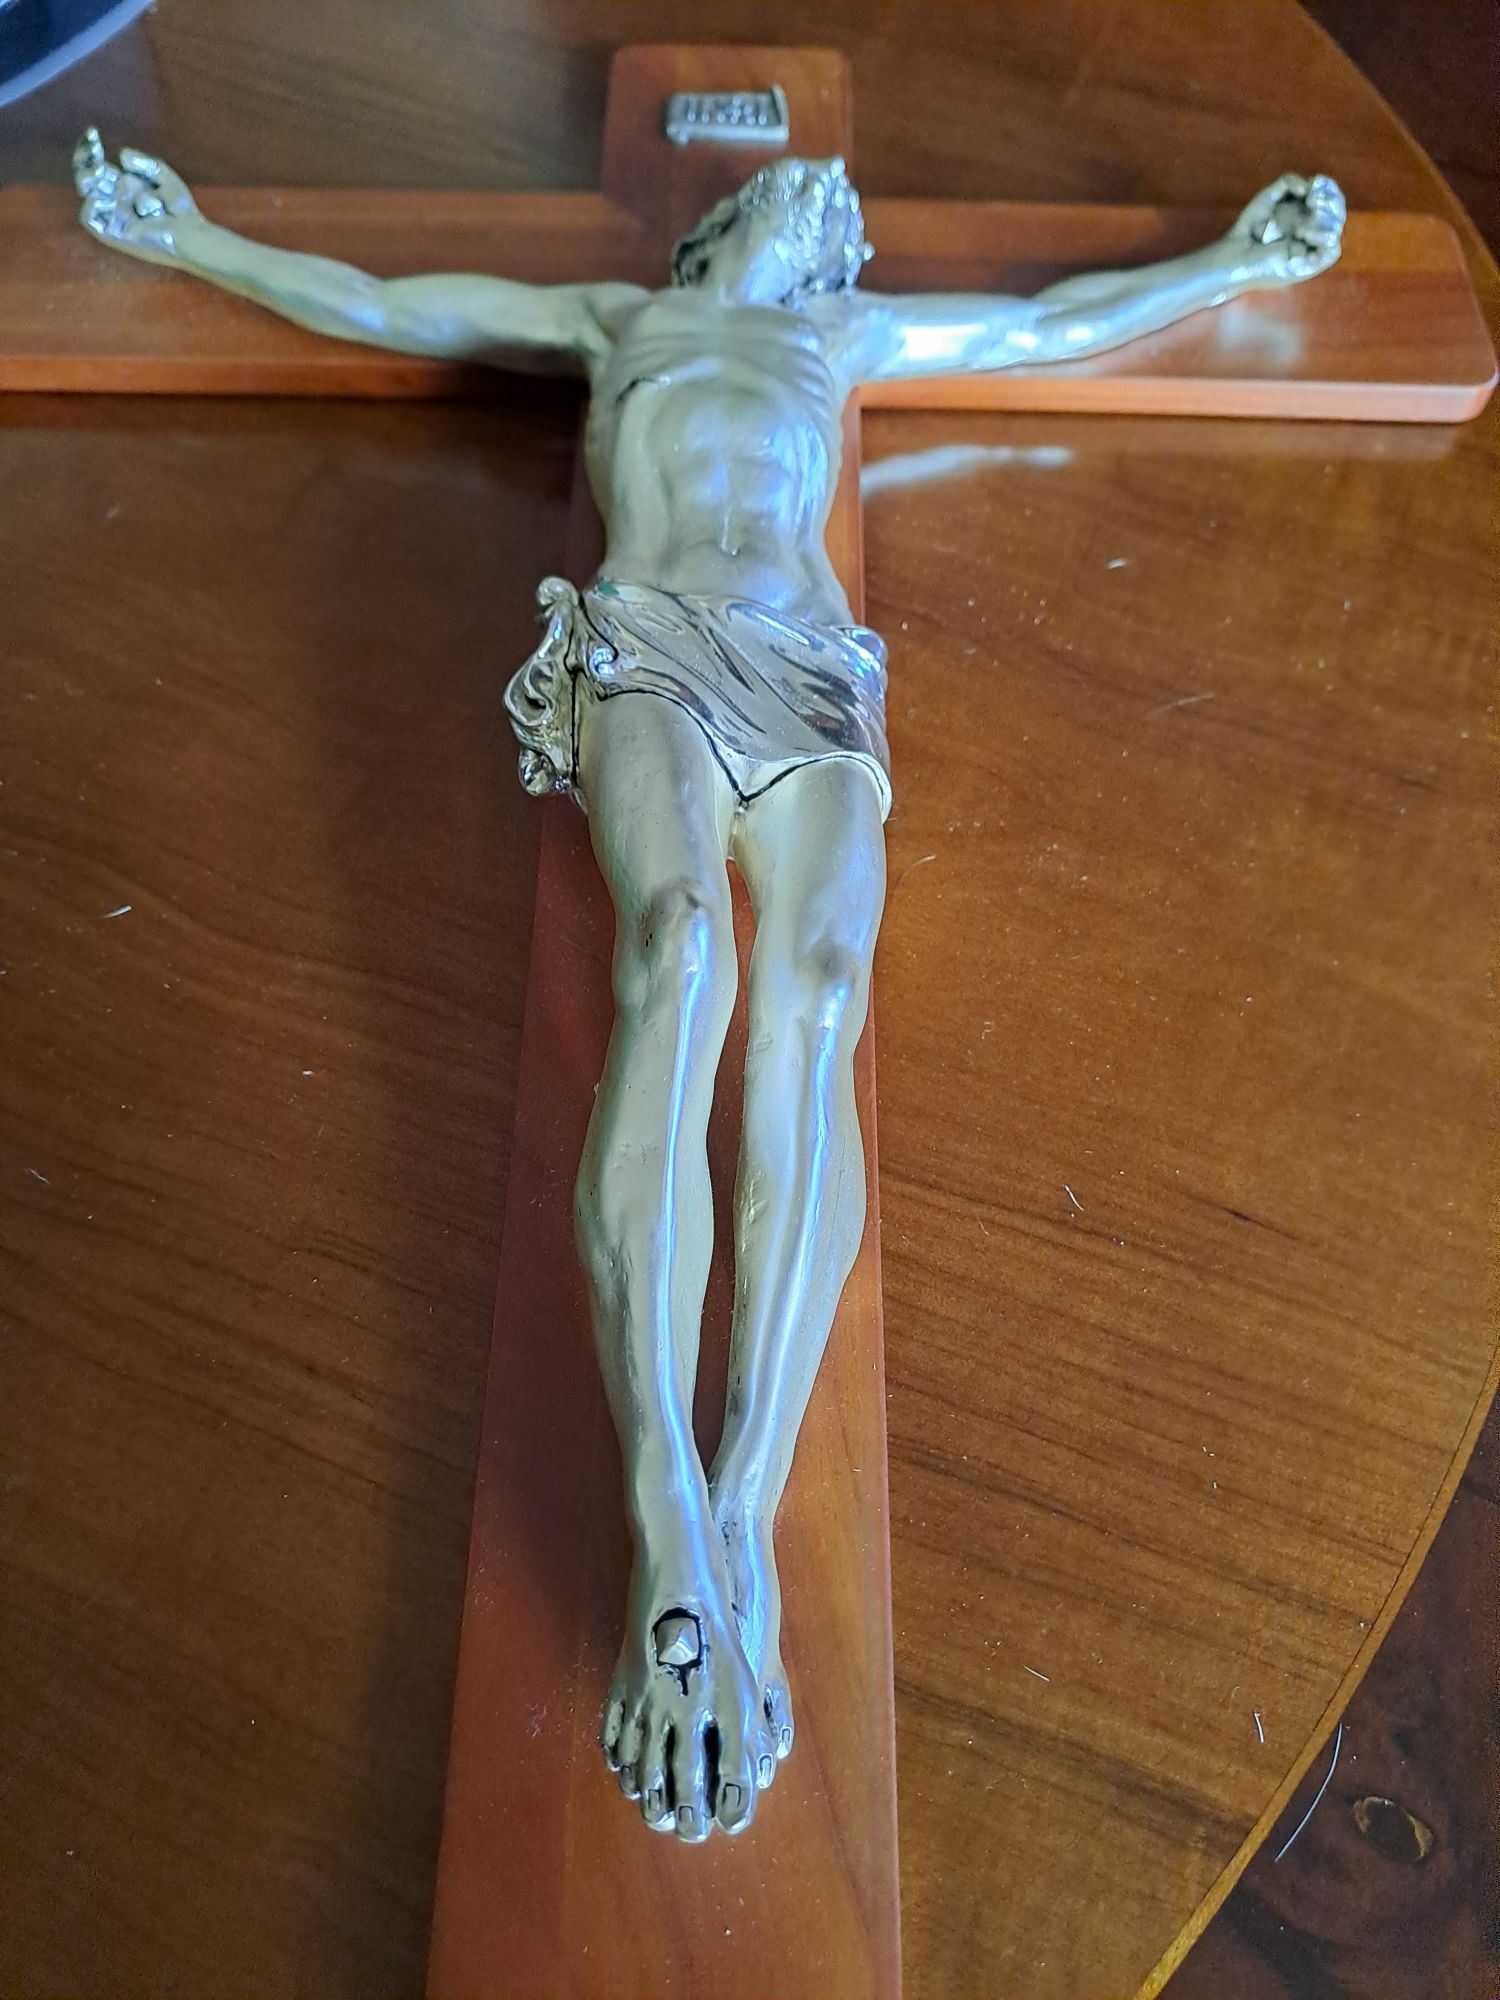 Crucifixo jesus cristo em argento/prata